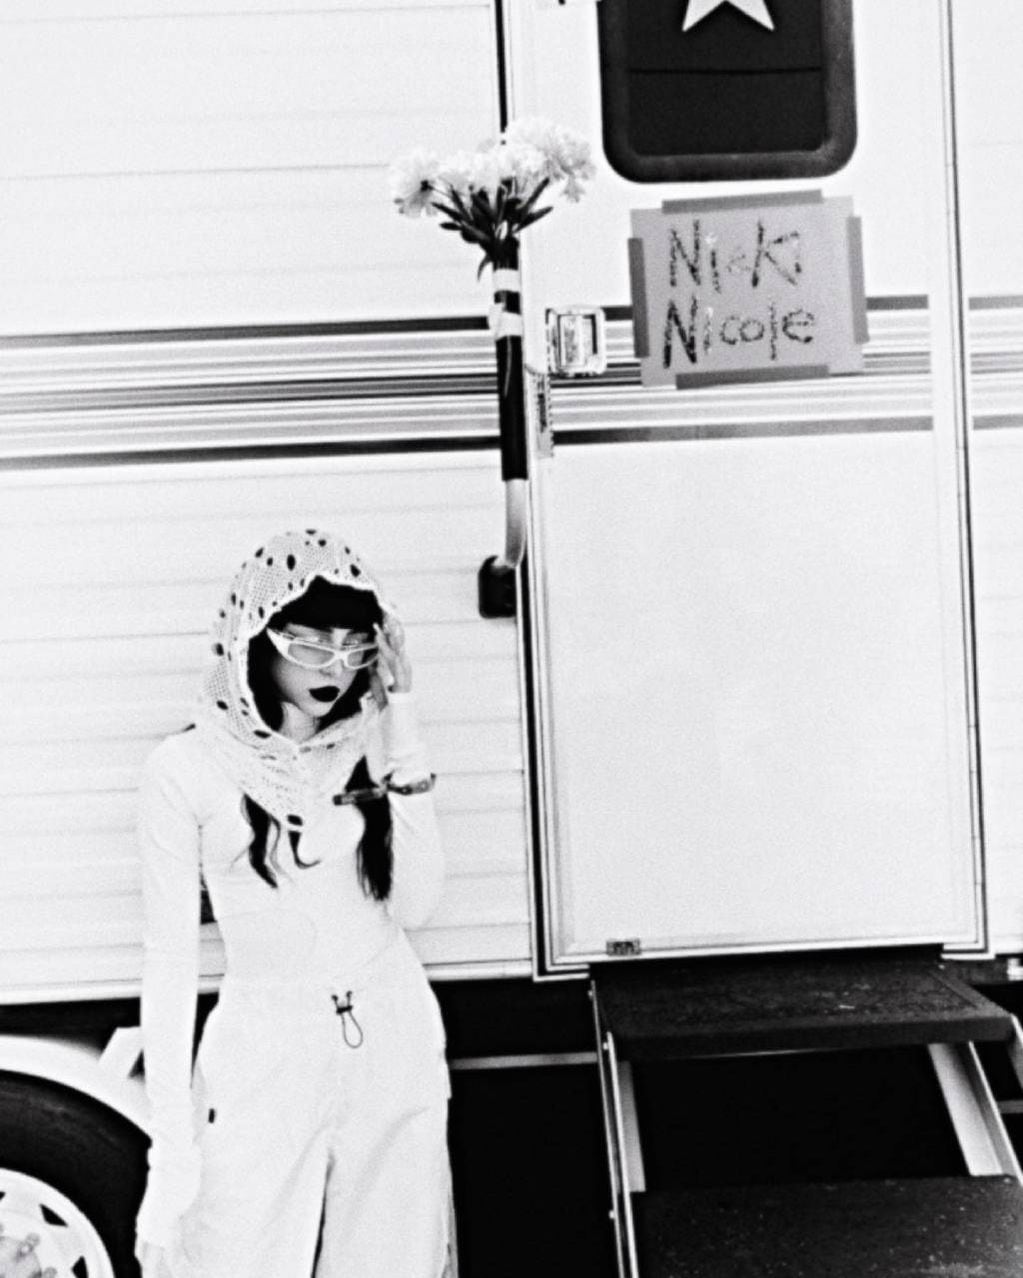 Nicki Nicole se presentó por segunda vez en el festival Coachella 2022.